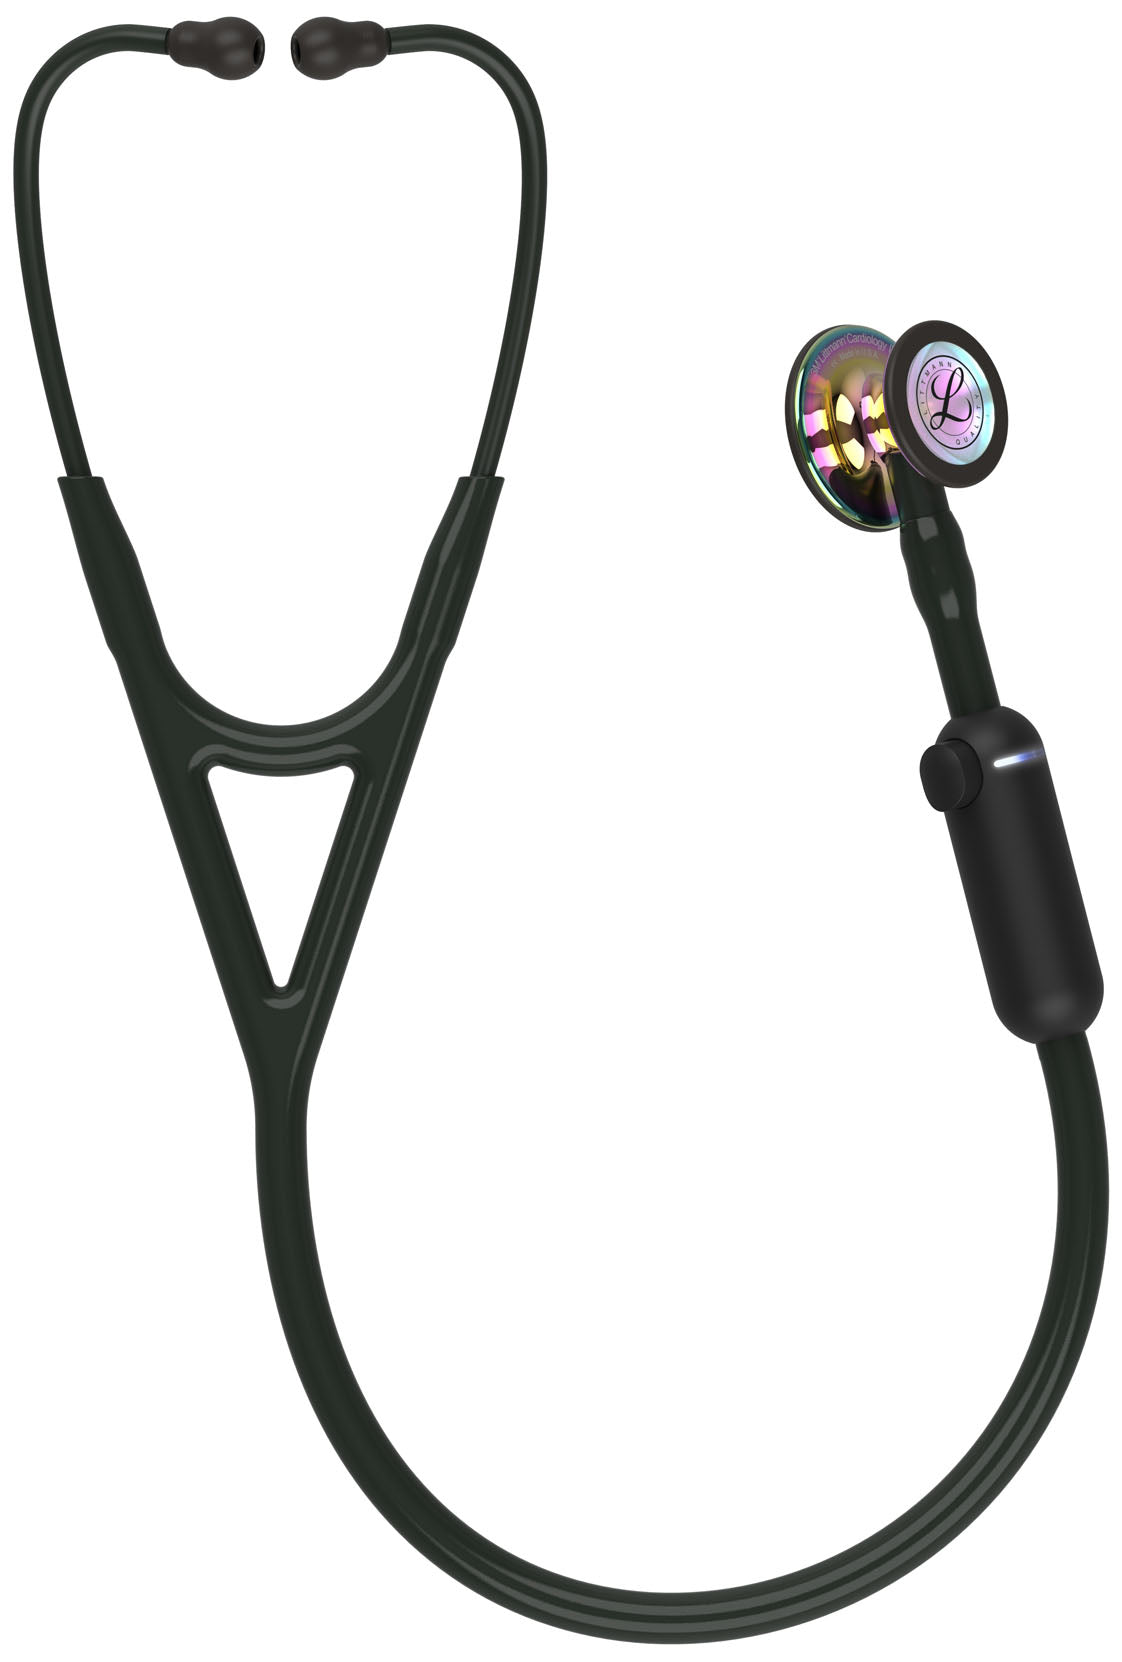 Example - Littmann CORE Digital Stethoscope